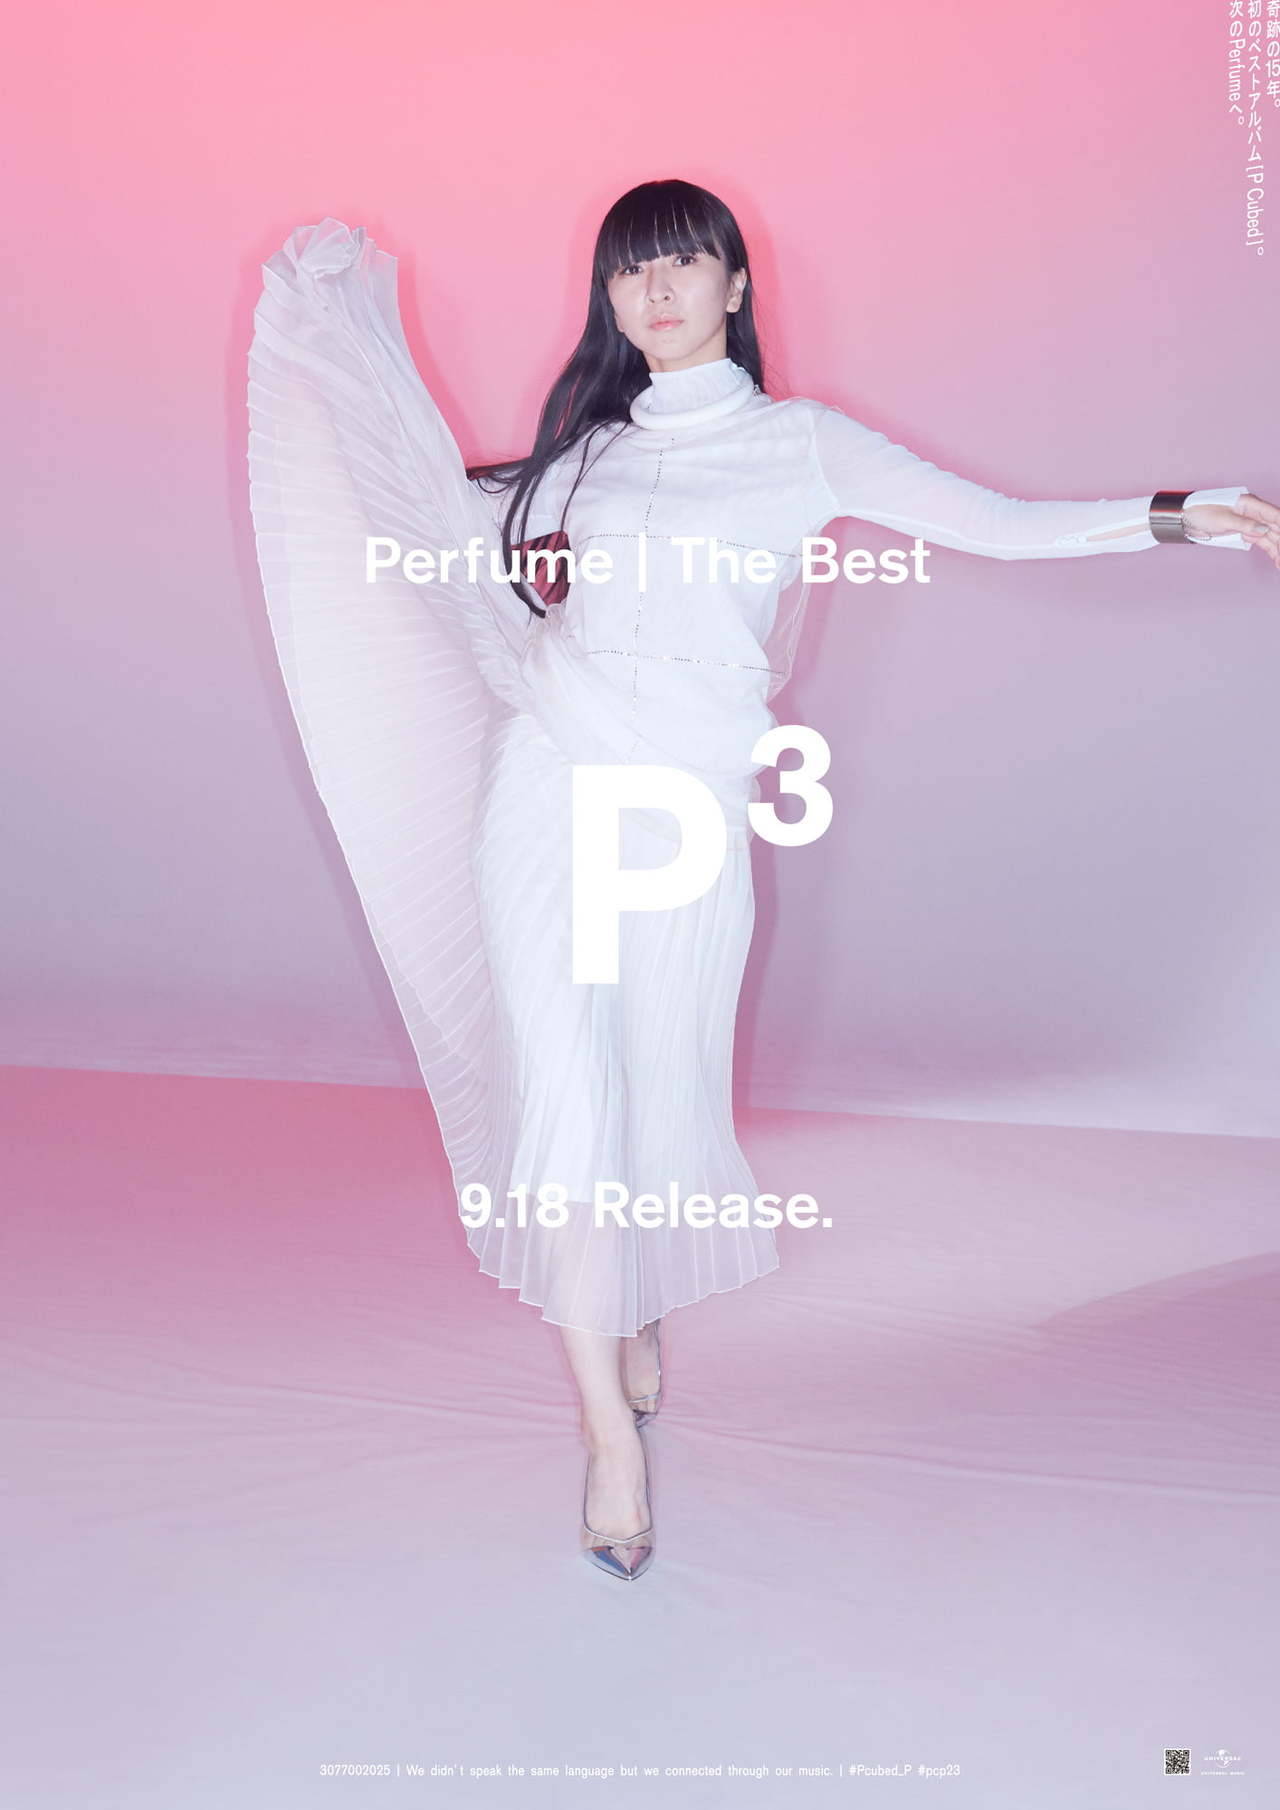 Kimono Beat Taopriest Perfume The Best P Cubed Poster 20